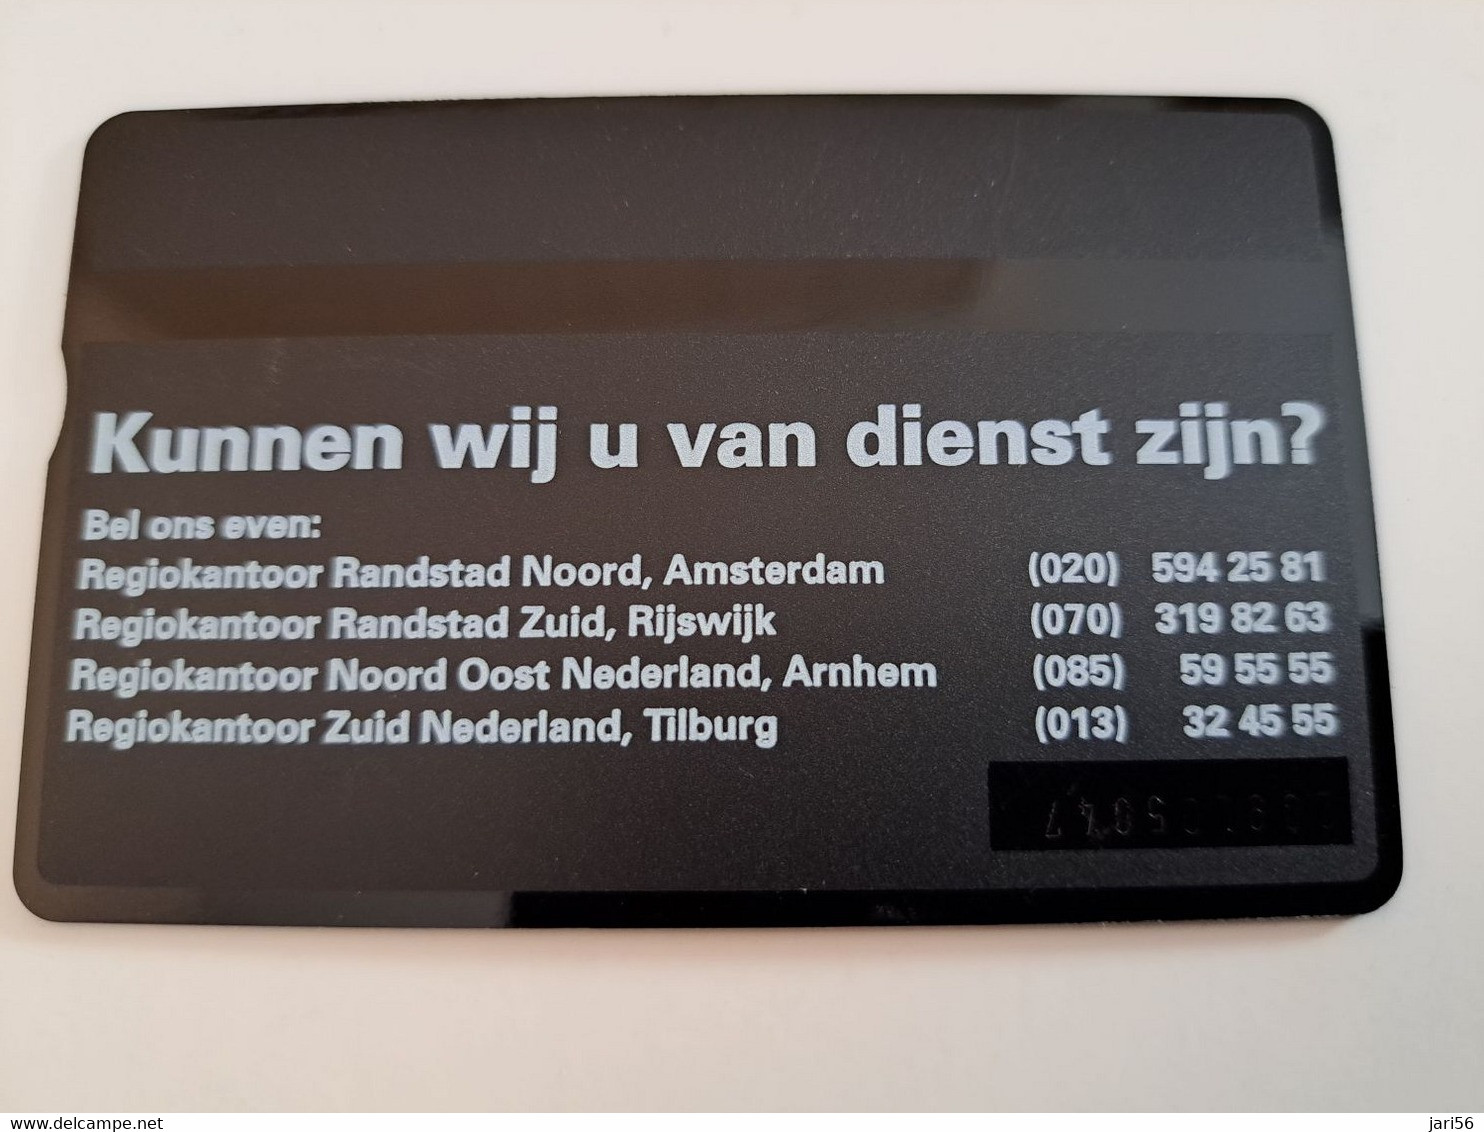 NETHERLANDS  ADVERTISING  4 UNITS/ DELTA LOYD / TRAIN     / NO; R034 LANDYS & GYR   Mint  ** 11780** - Privées